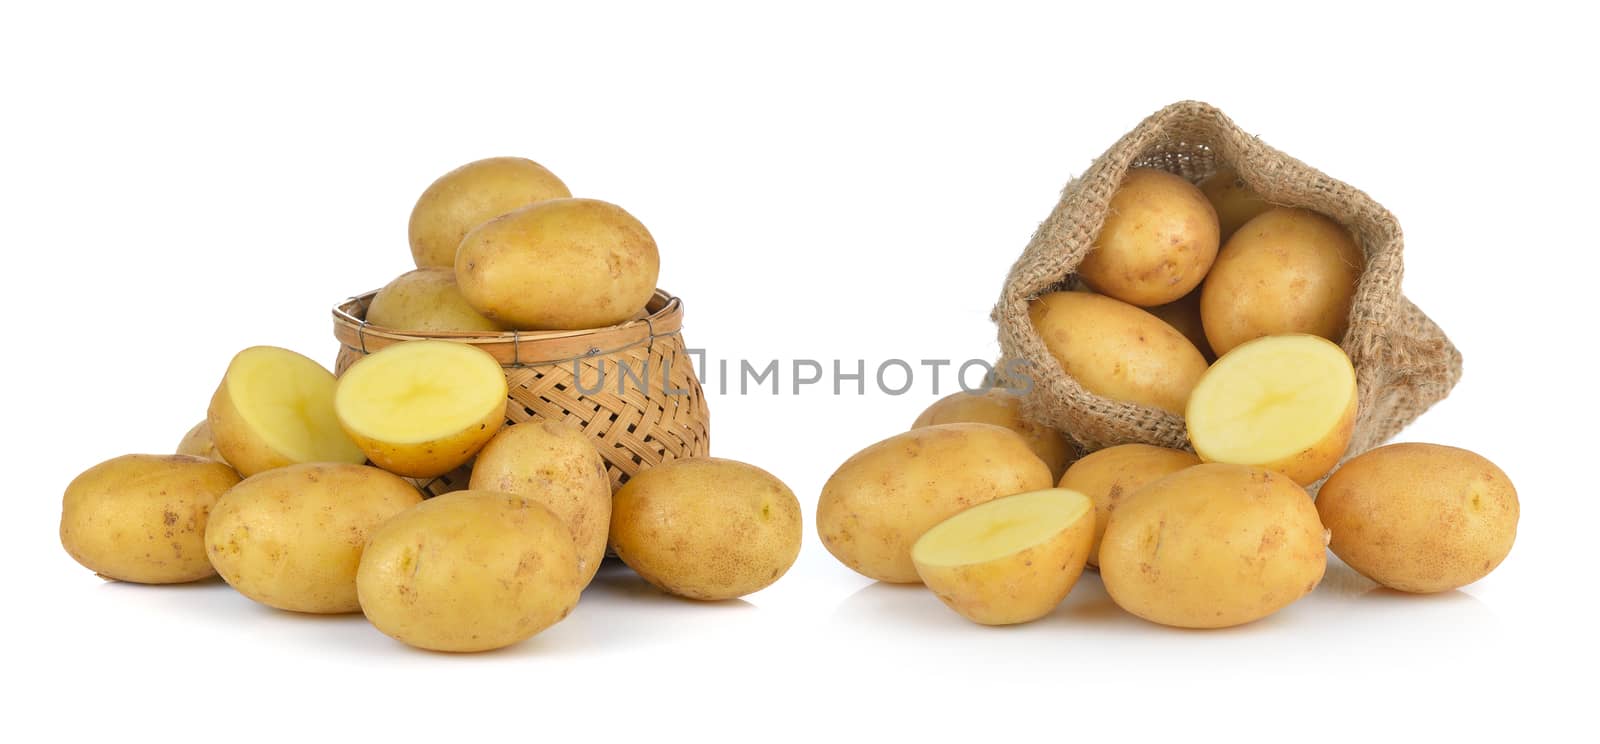  potato isolated on white background by sommai